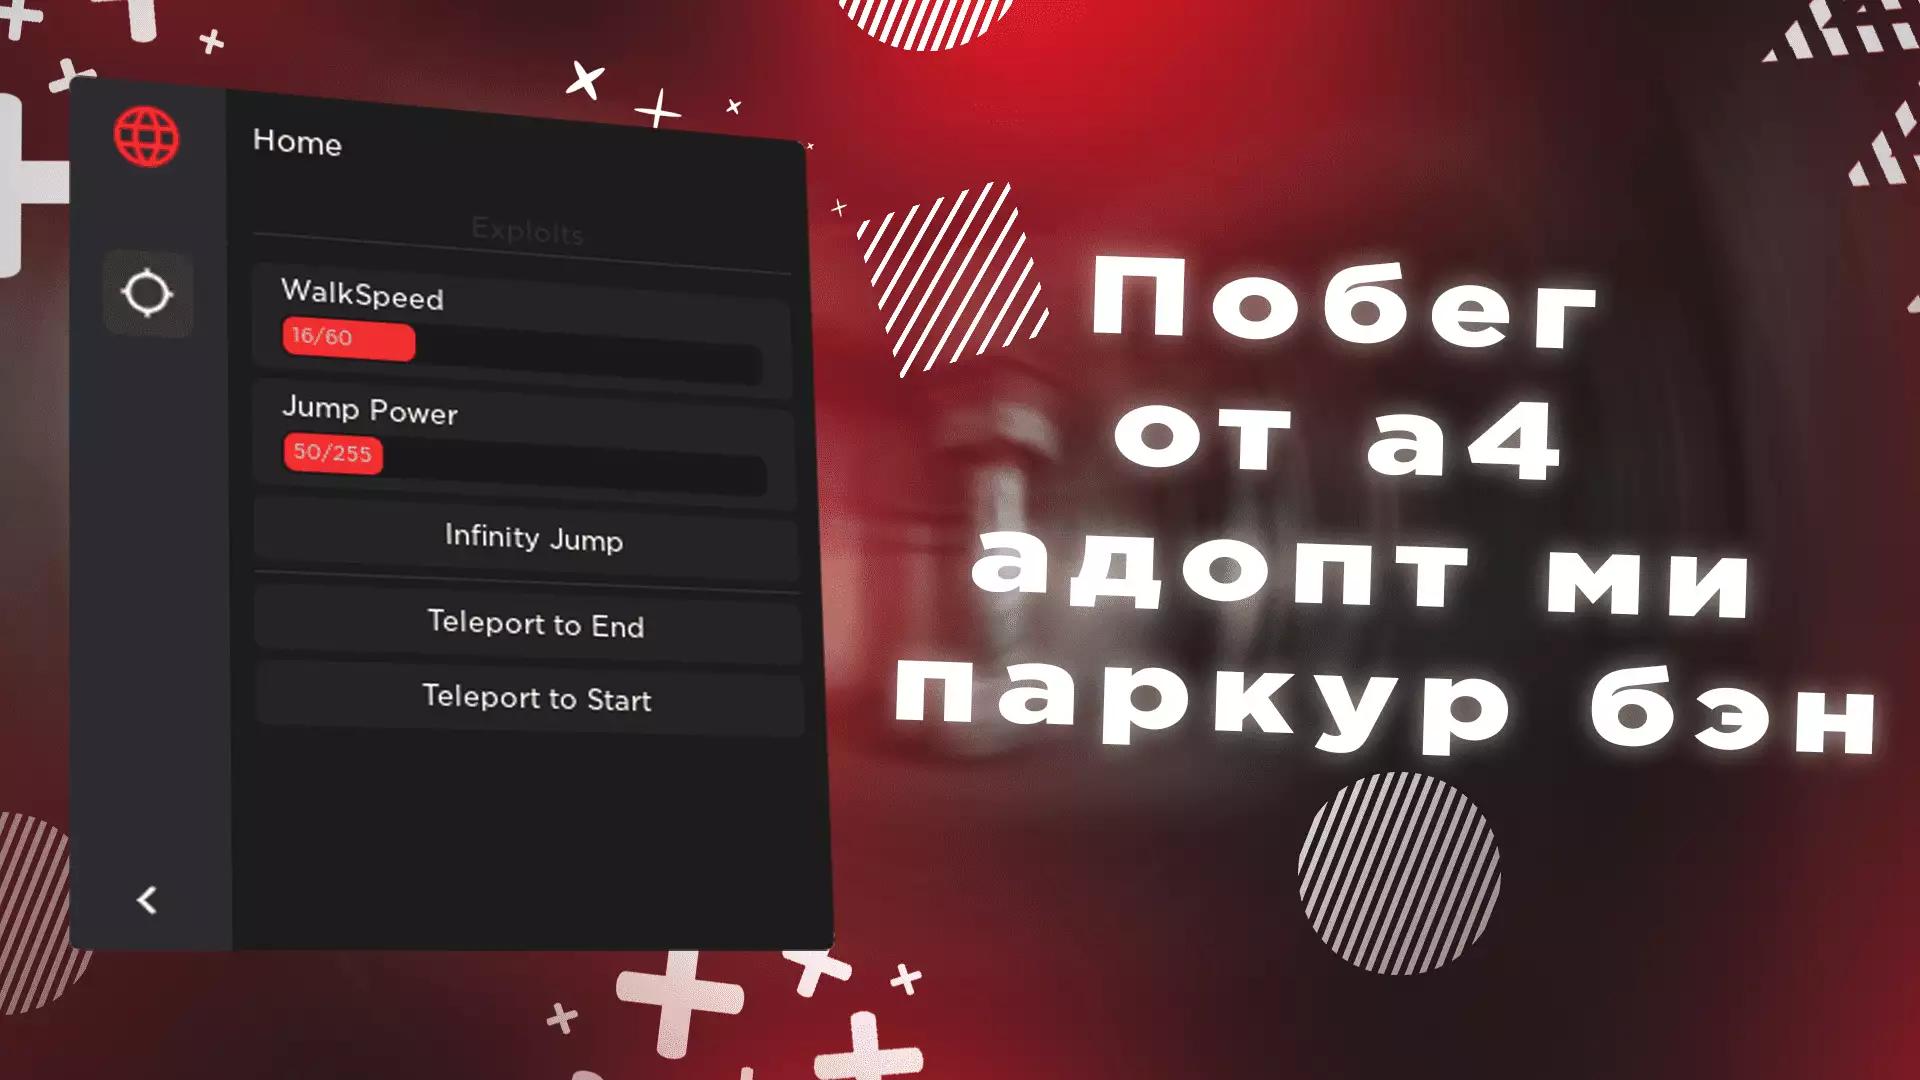 Preview of Pobeg ot a4 adopt mi parkur ben - Teleport to end/start, inf jumps